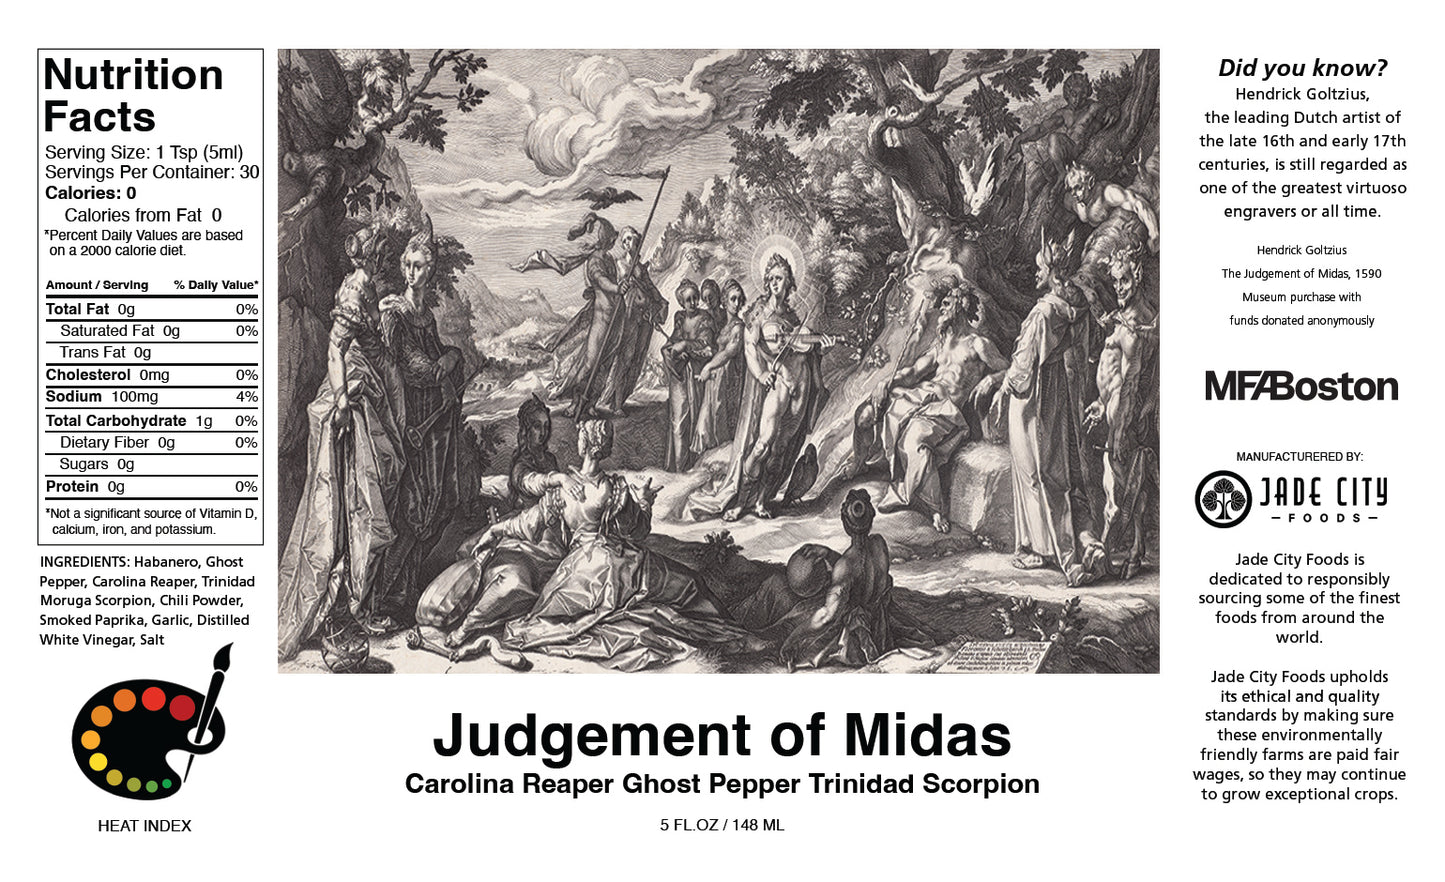 Judgement of Midas : Carolina Reaper, Ghost Pepper, Trinidad Scorpion